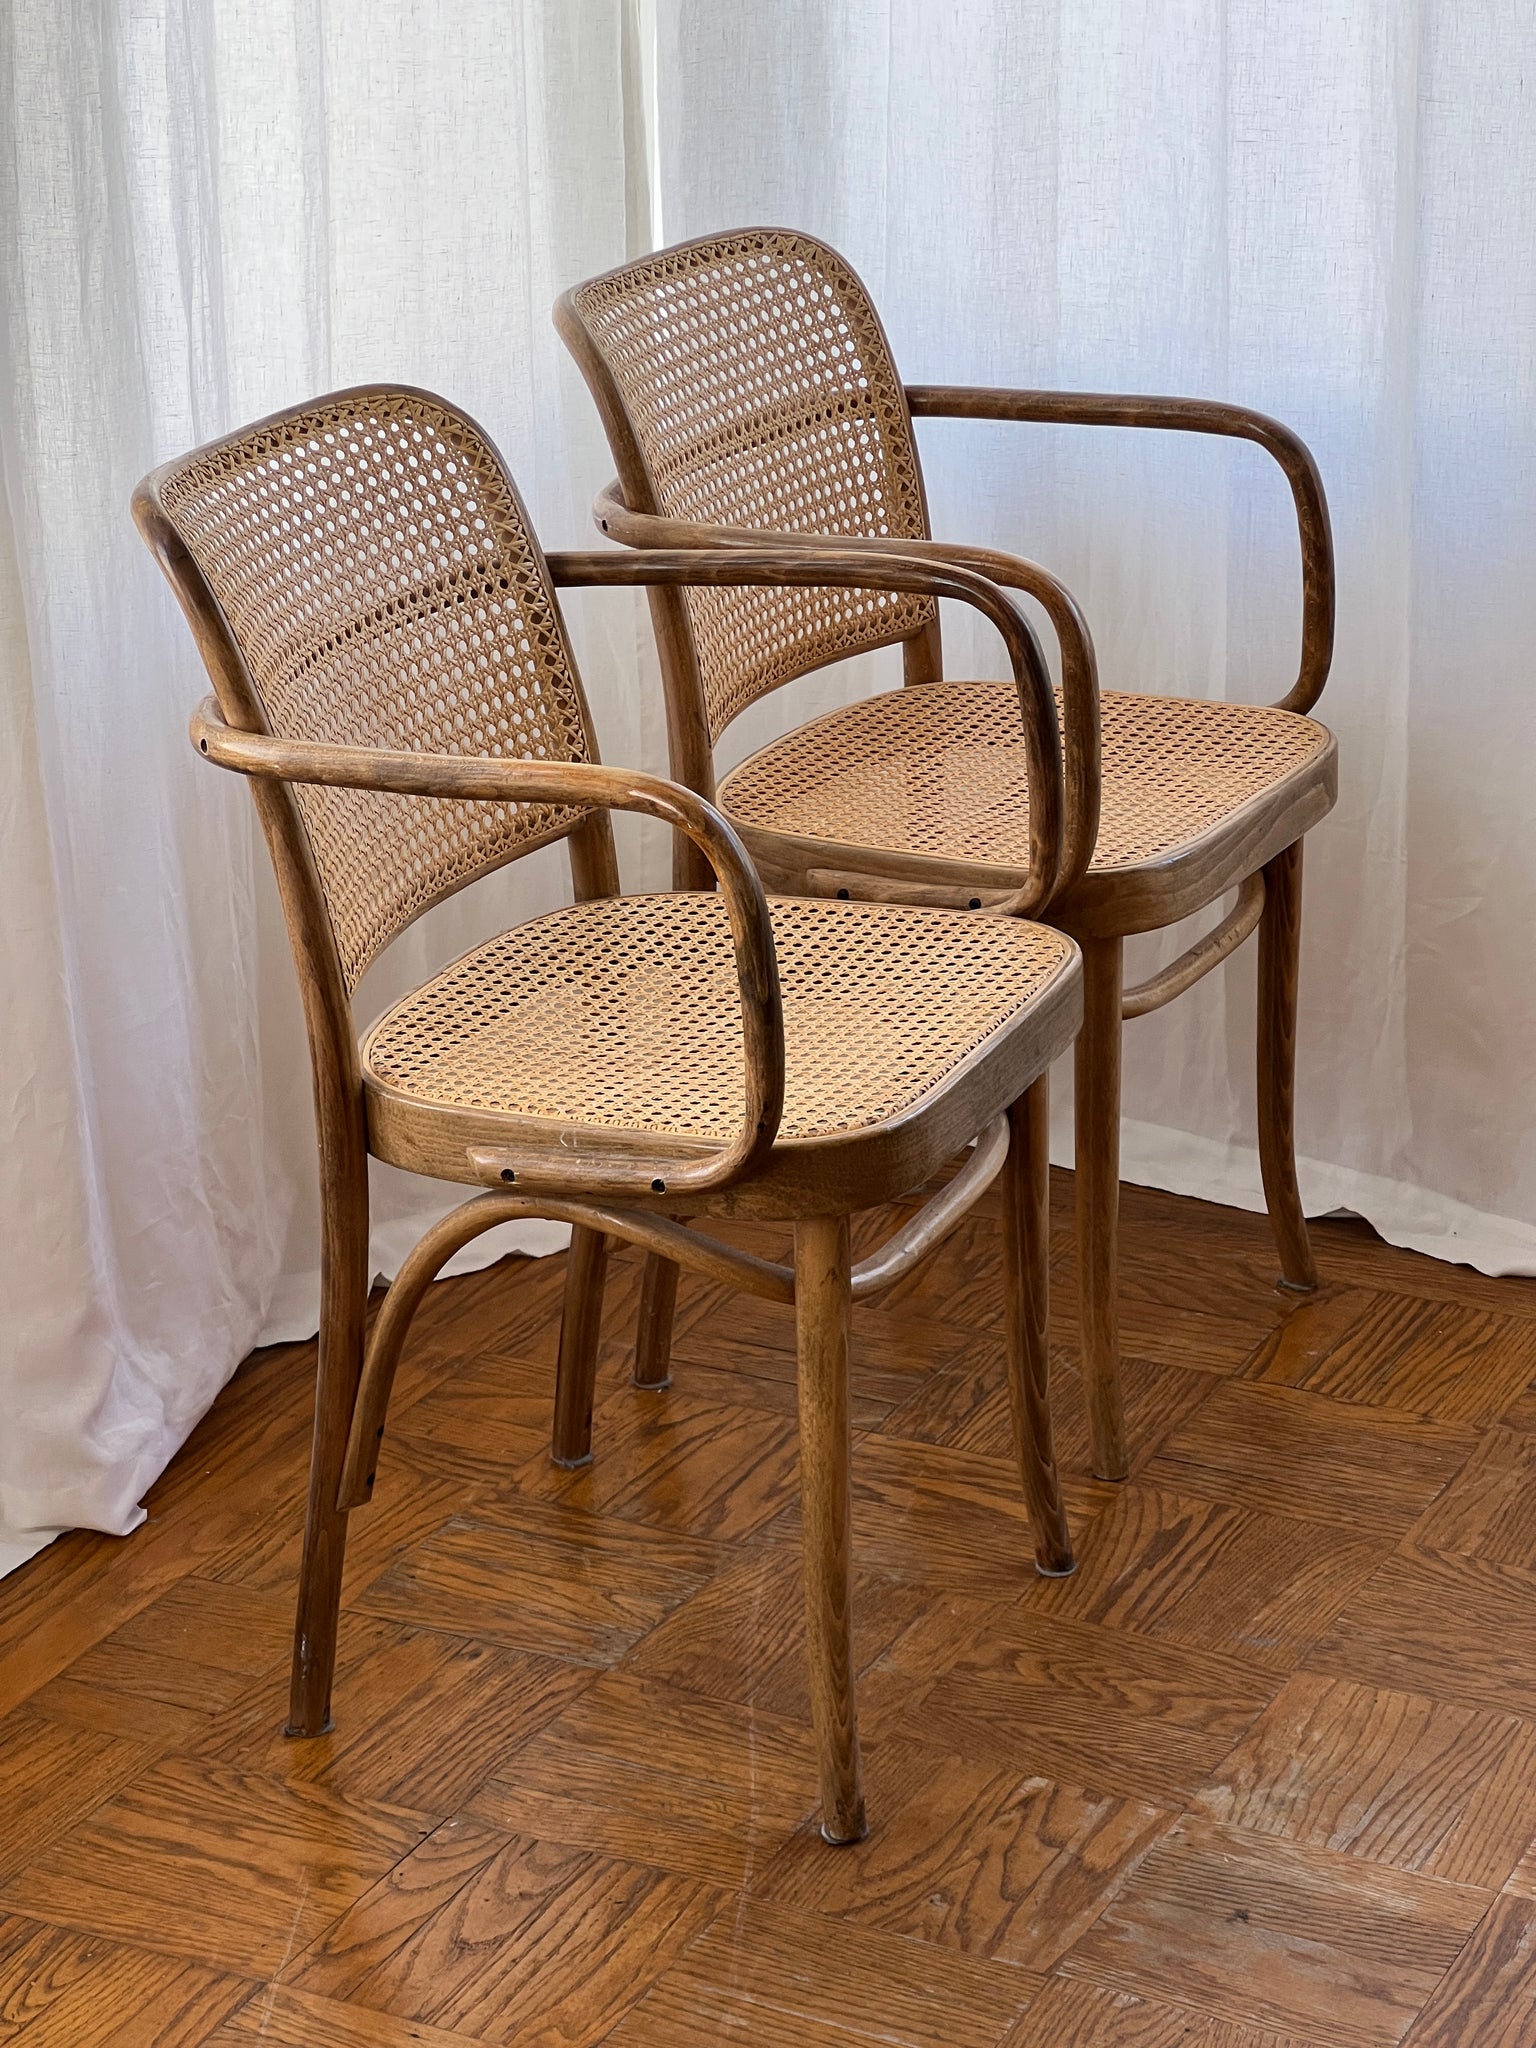 1950s Thonet No. 811 Prague Arm Chairs by Josef Hoffman